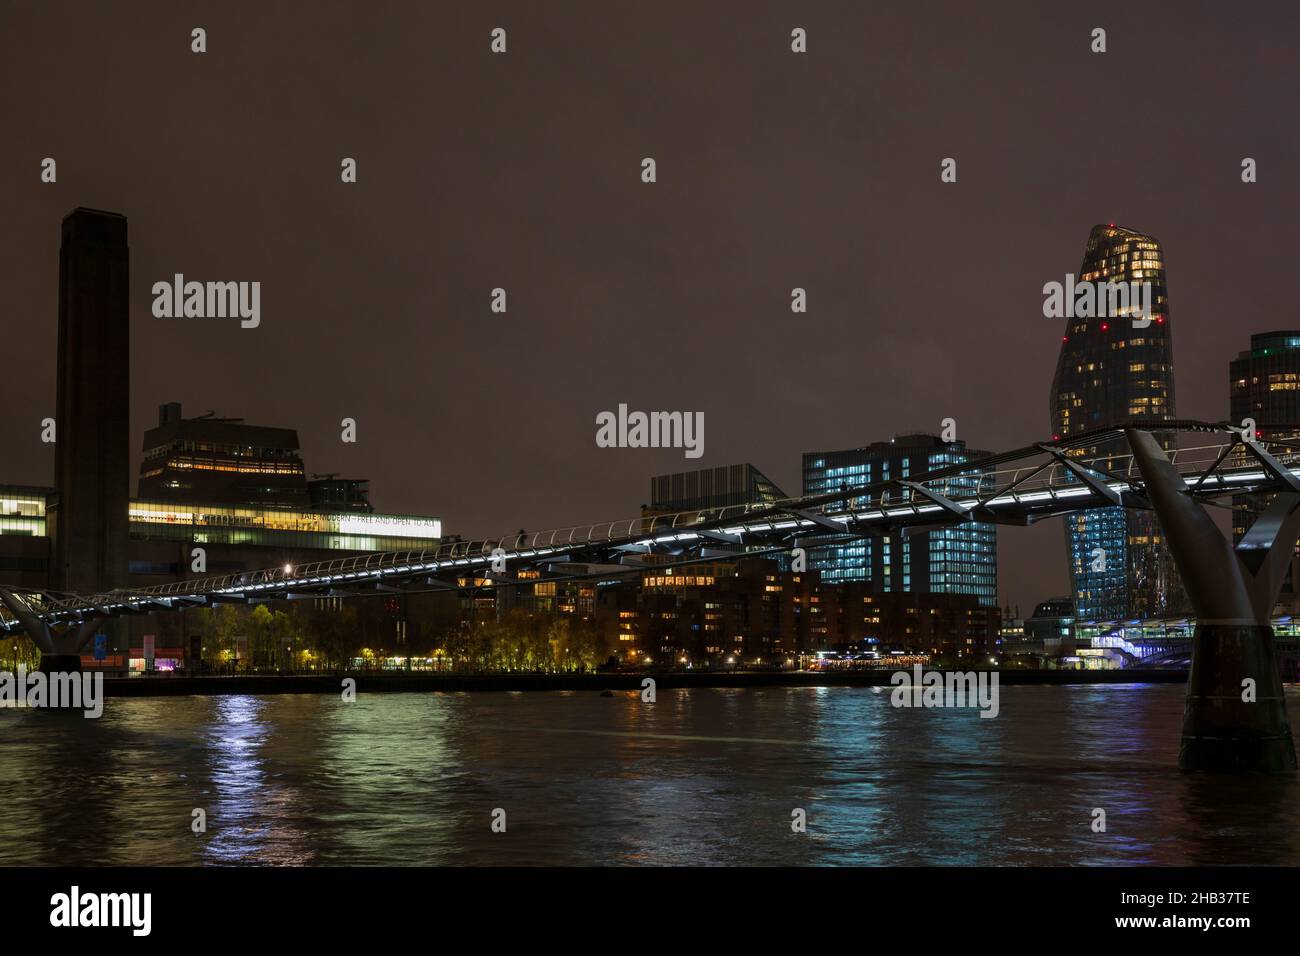 London Millennium Foodbridge, Tate Modern et One Blackfriars à Londres, Angleterre. Banque D'Images